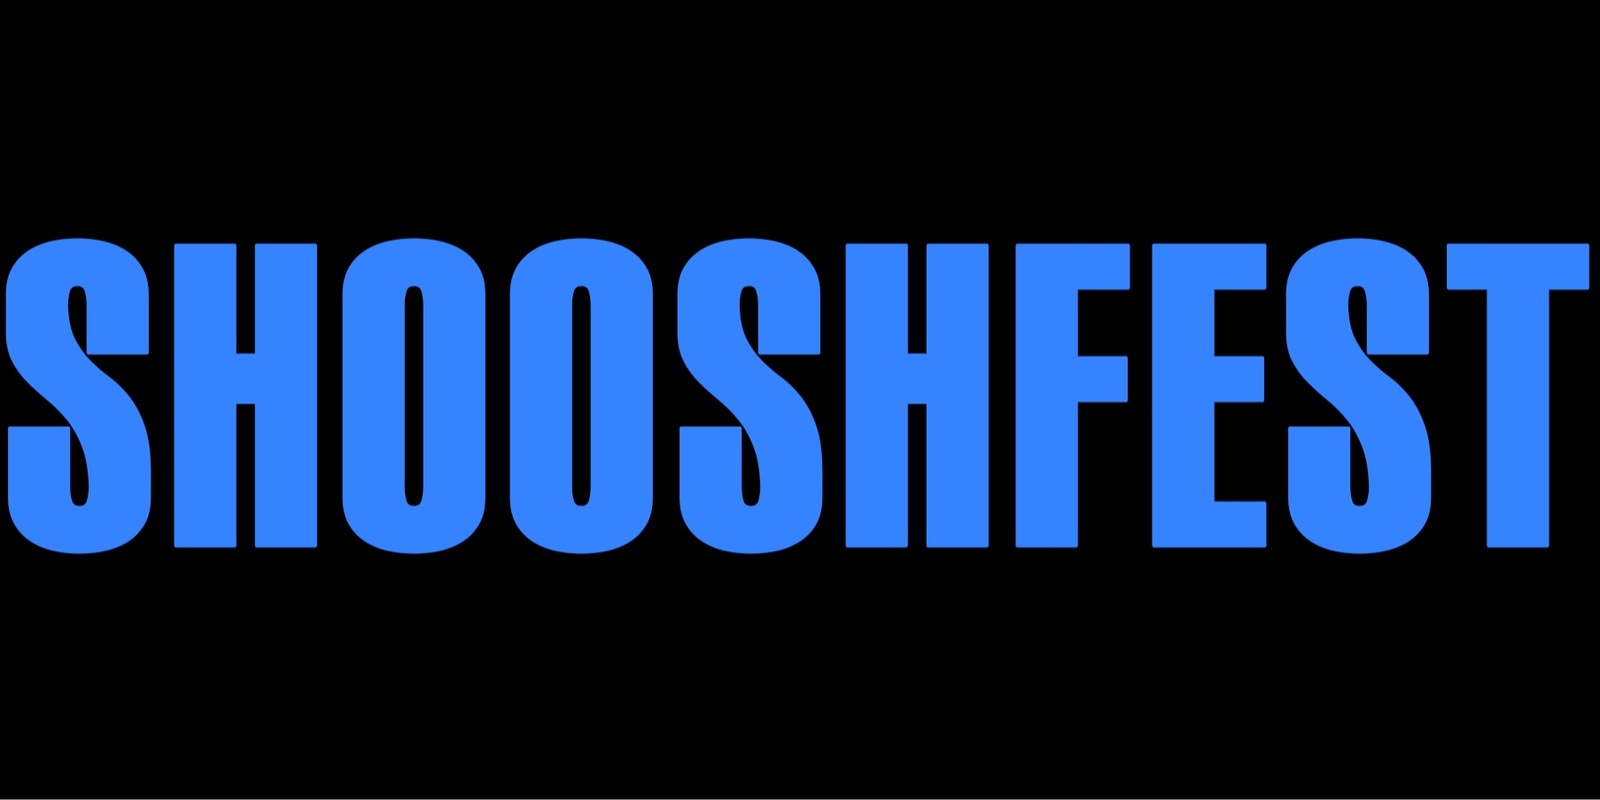 Banner image for SHOOSHFEST 2024